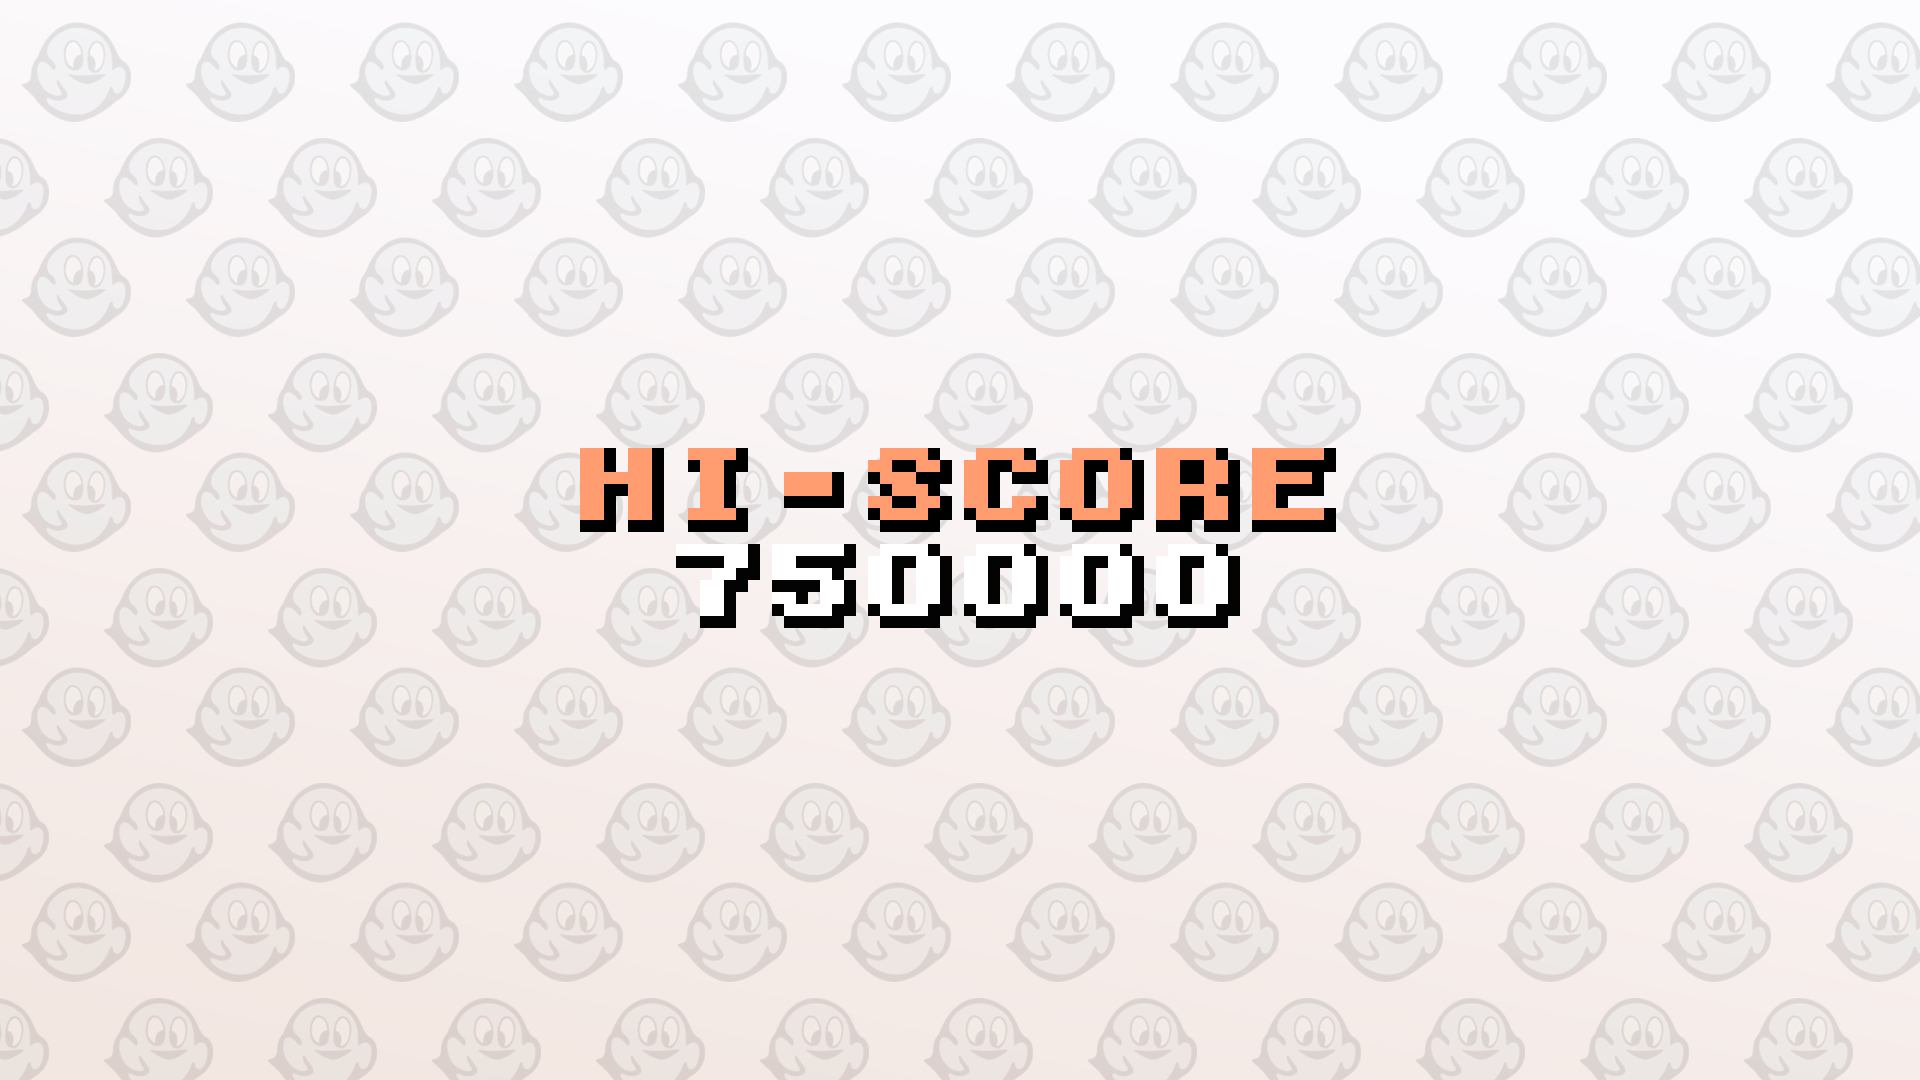 Icon for Score 750k